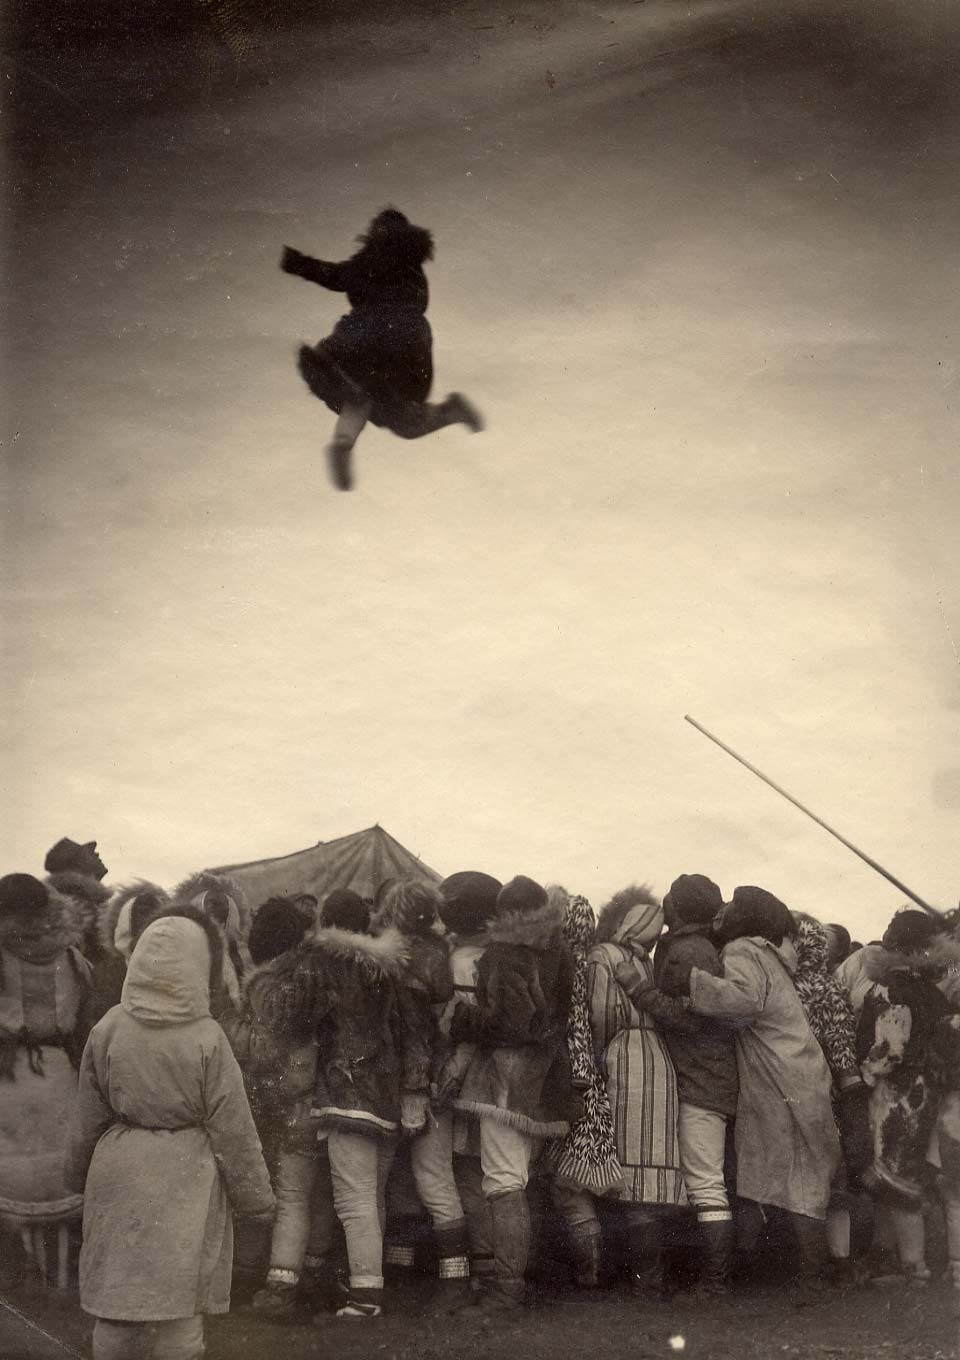 David Henry Jarvis, Nalukataq Festival, Albumen print, 1897-98.200.100.200.45, NBWM